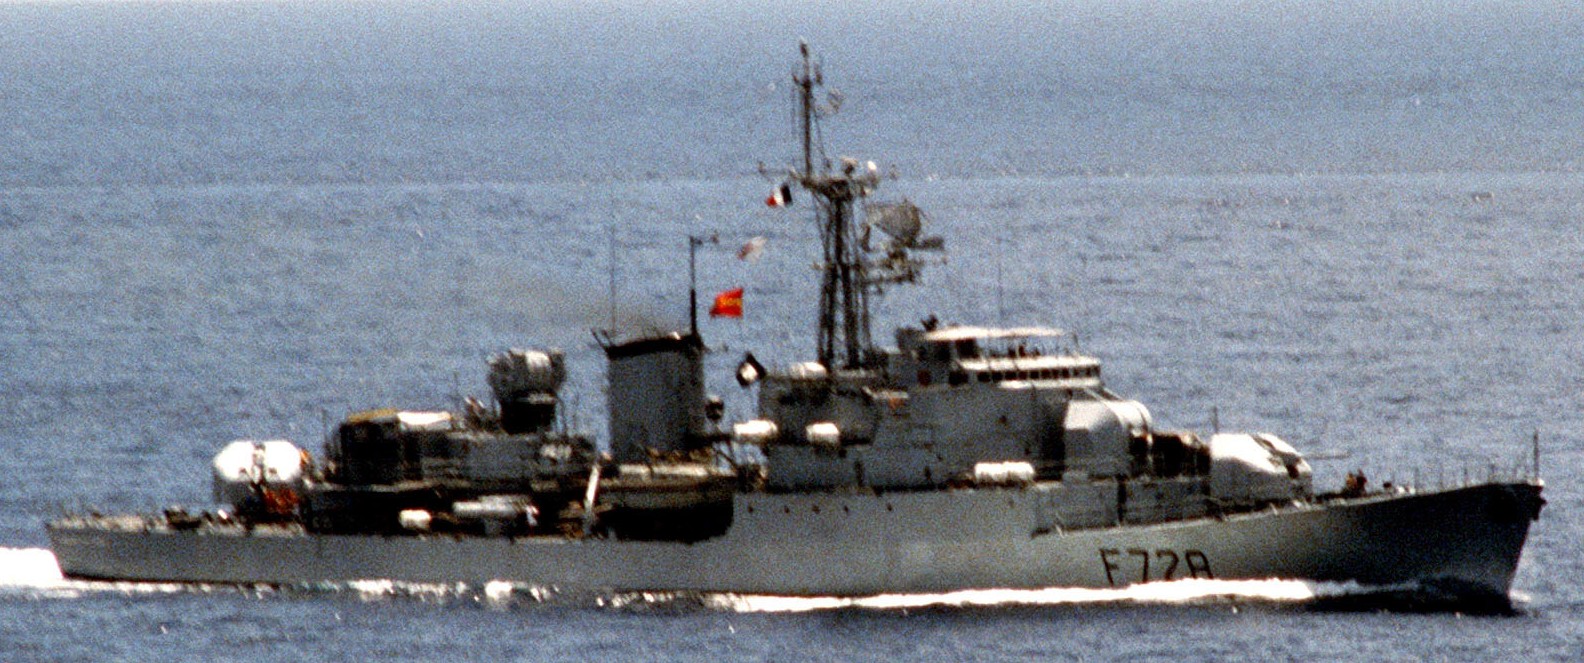 riviere class frigate aviso escorteur f-728 doudart de lagree french navy marine nationale 02